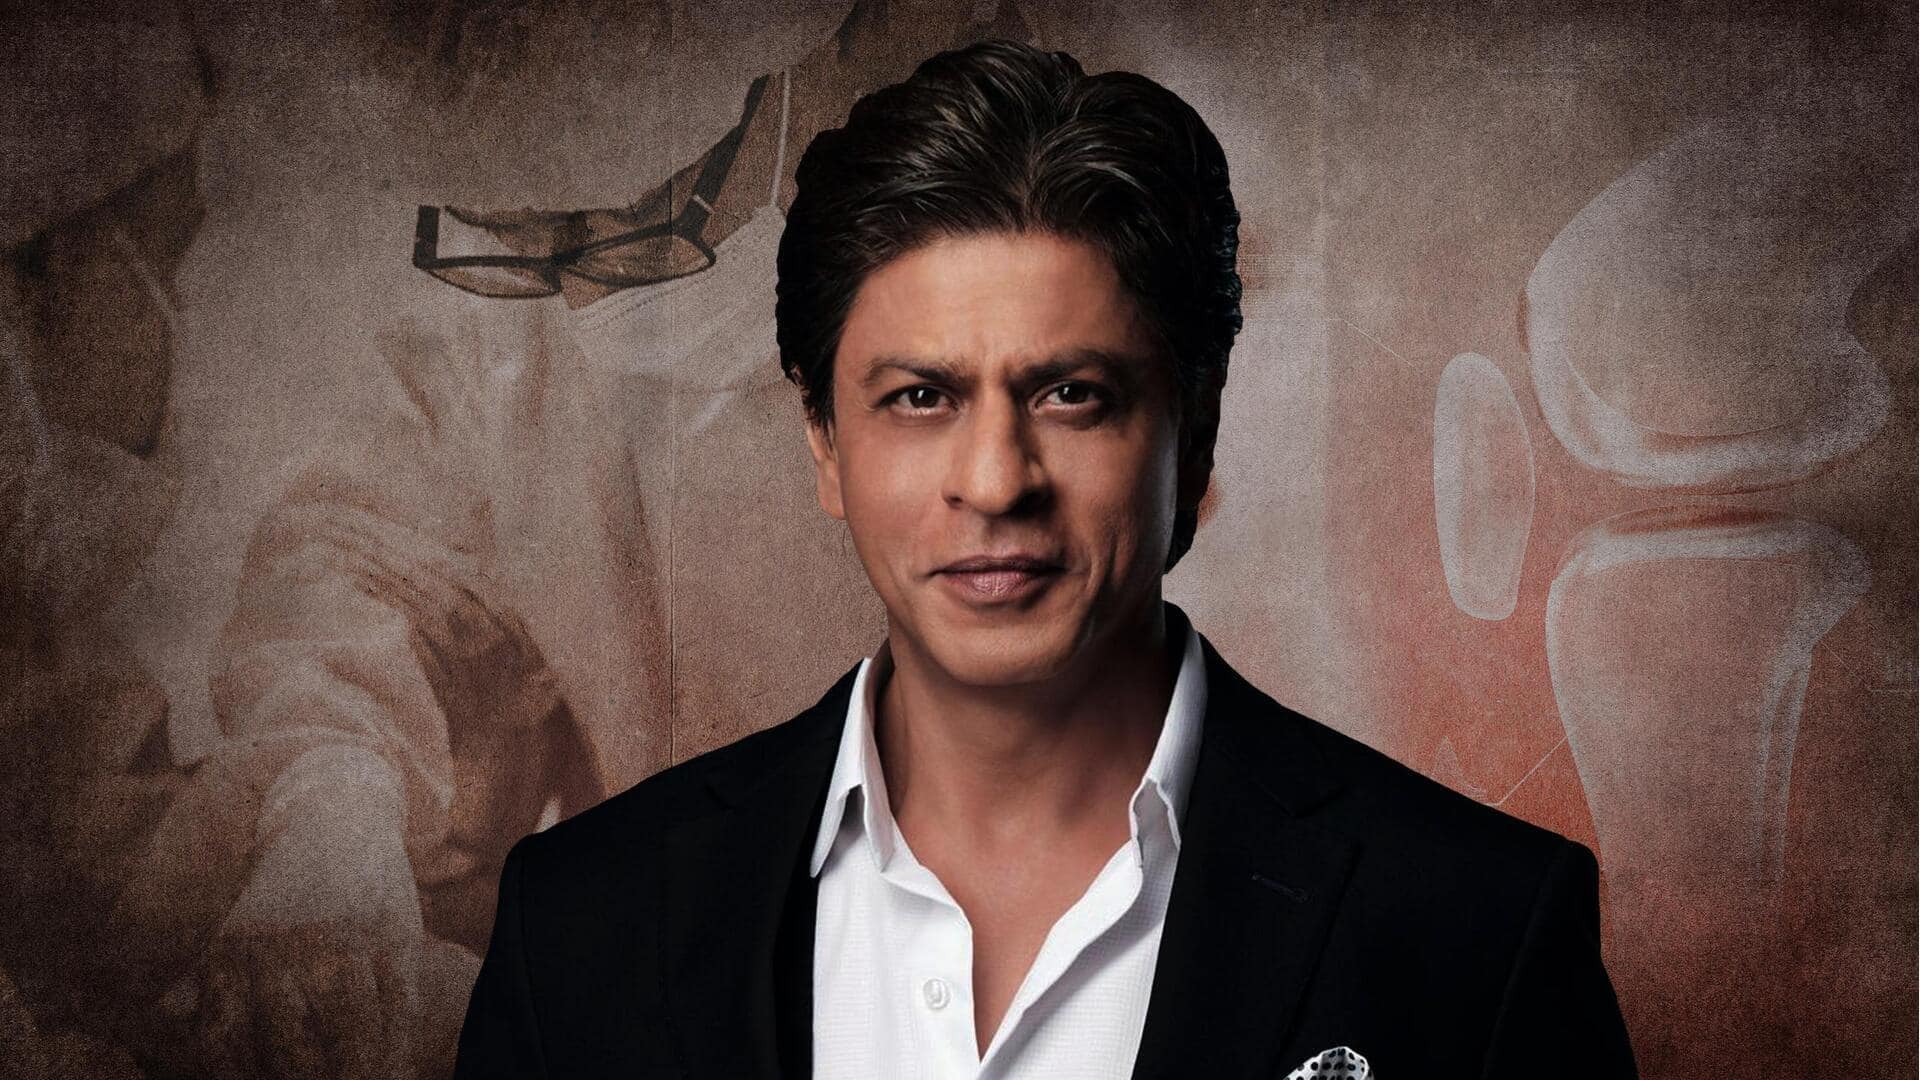 Shah Rukh Khan didn't sustain nose injury: Report